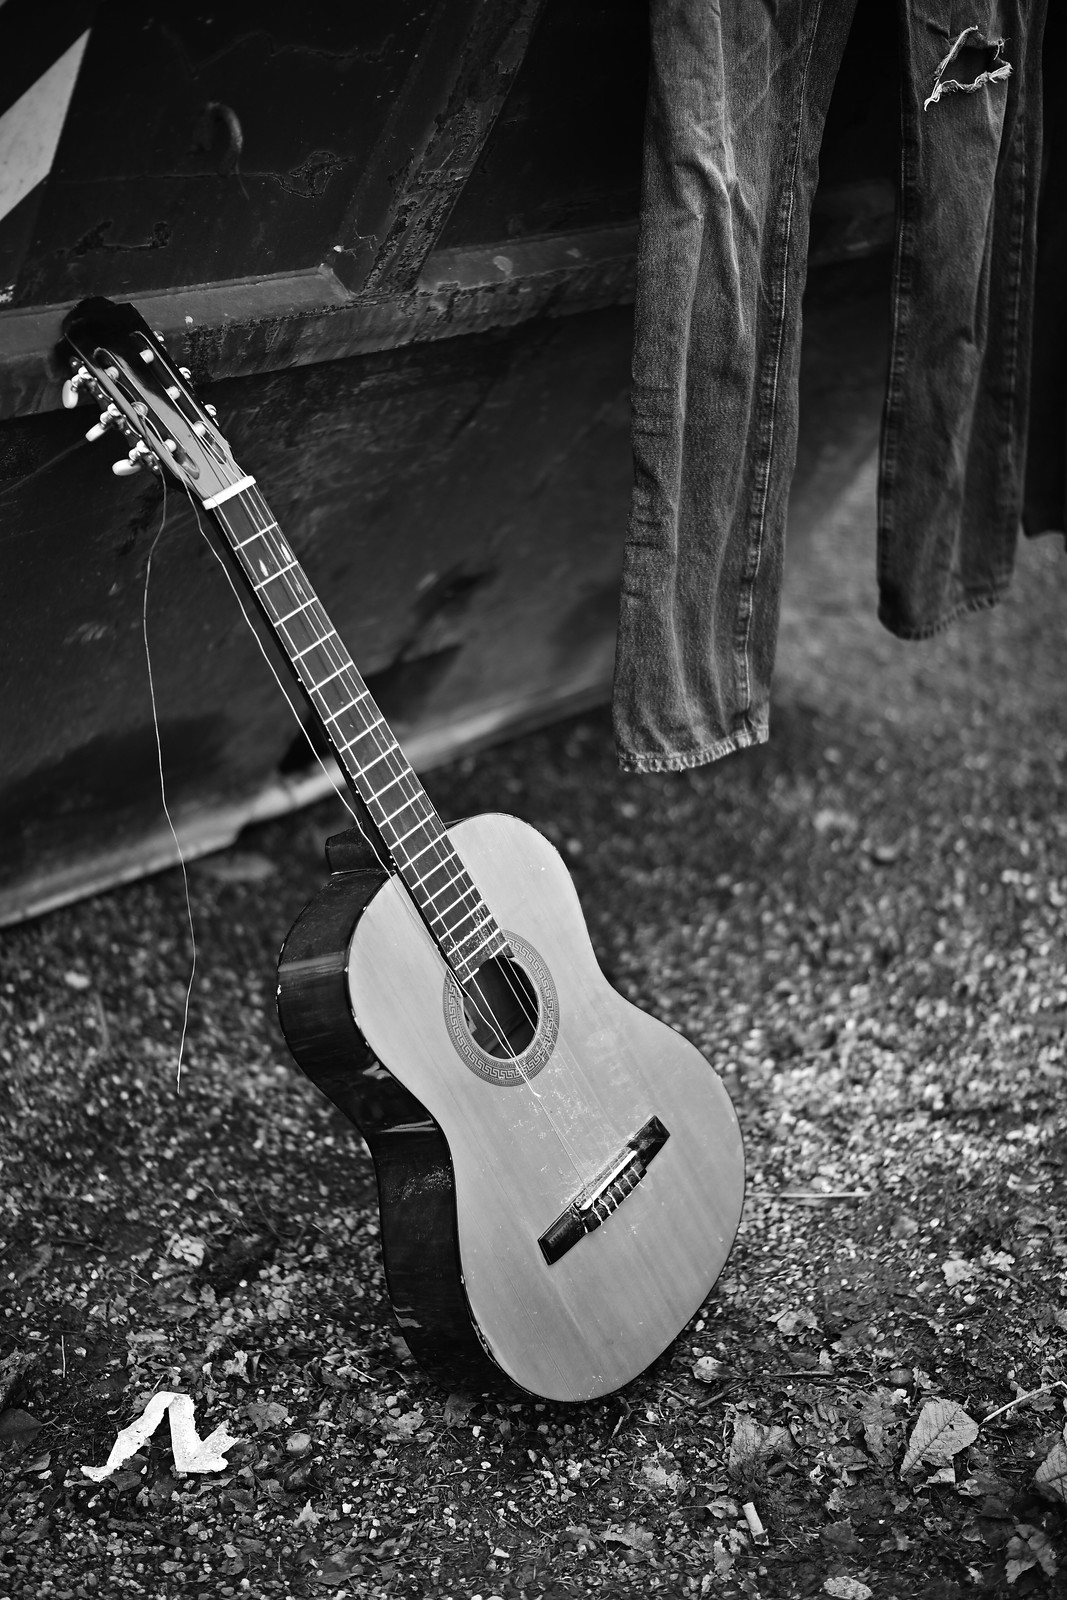 Broken guitar in black and white